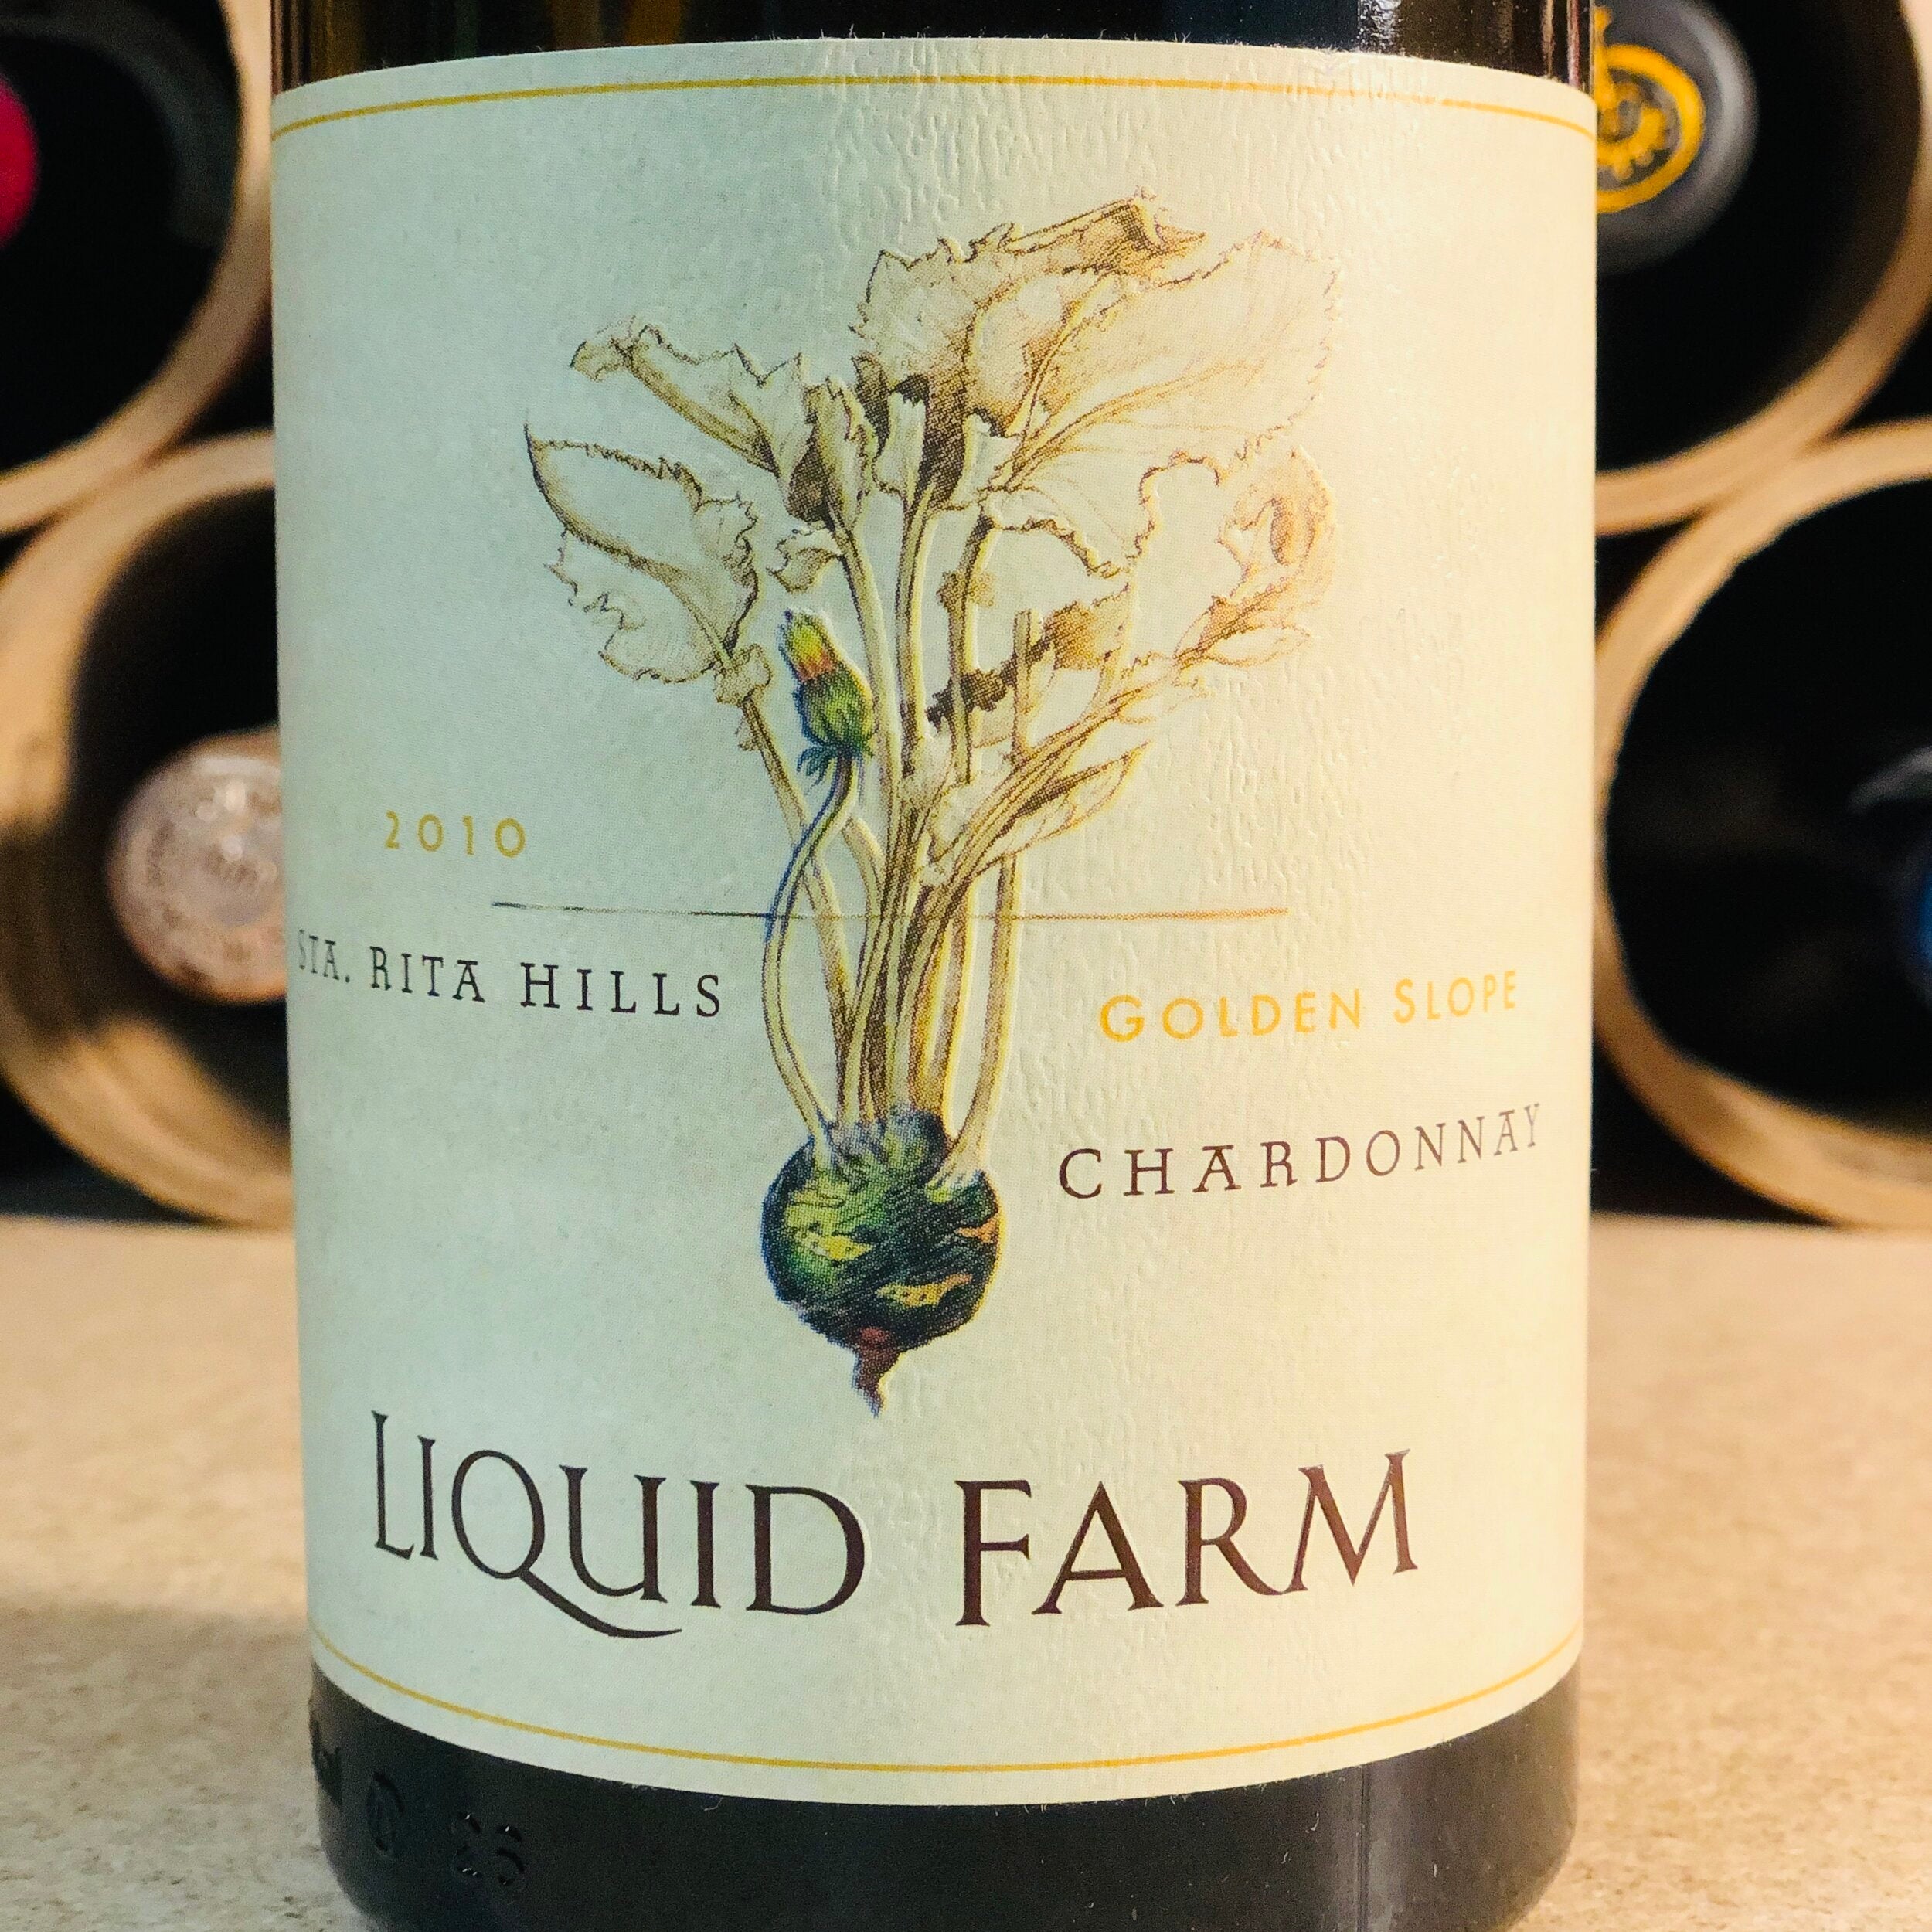 Liquid Farm, Santa Maria Valley, Golden Slope Chardonnay 2010